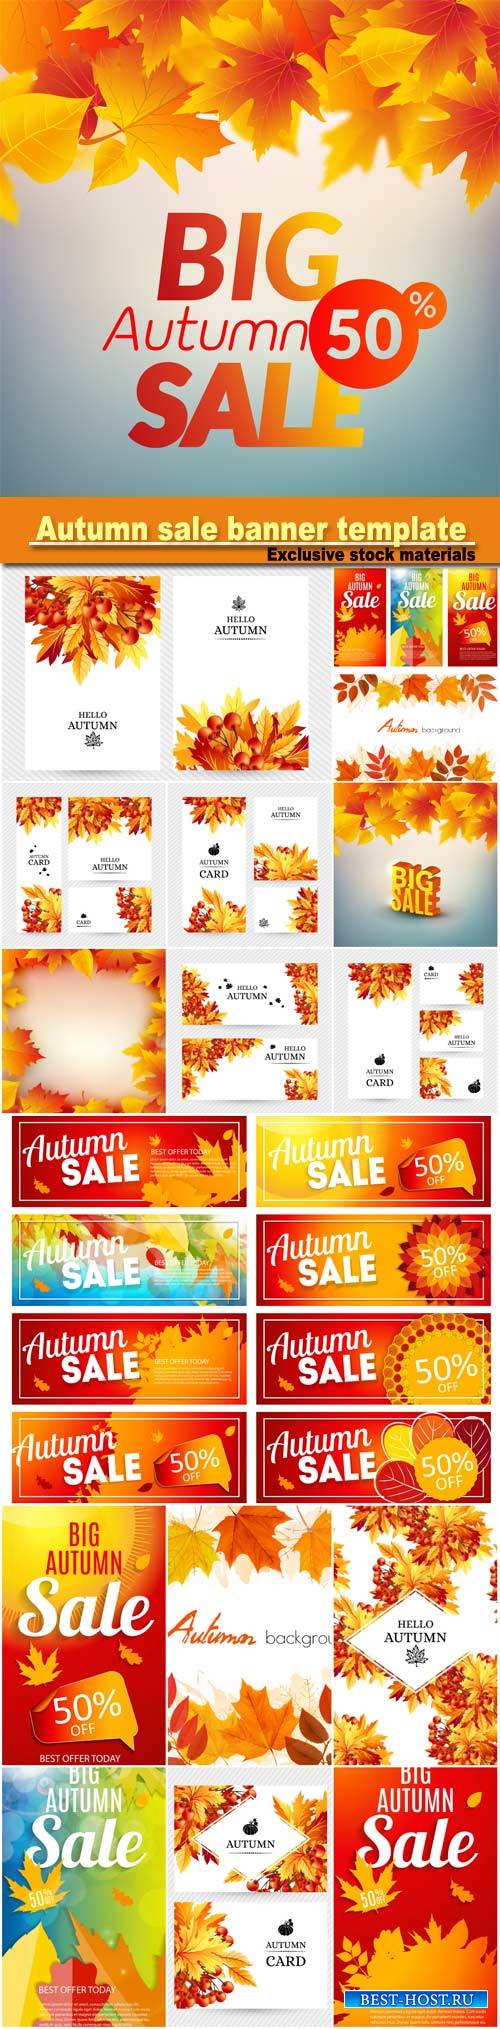 Autumn sale banner template set, business discount card